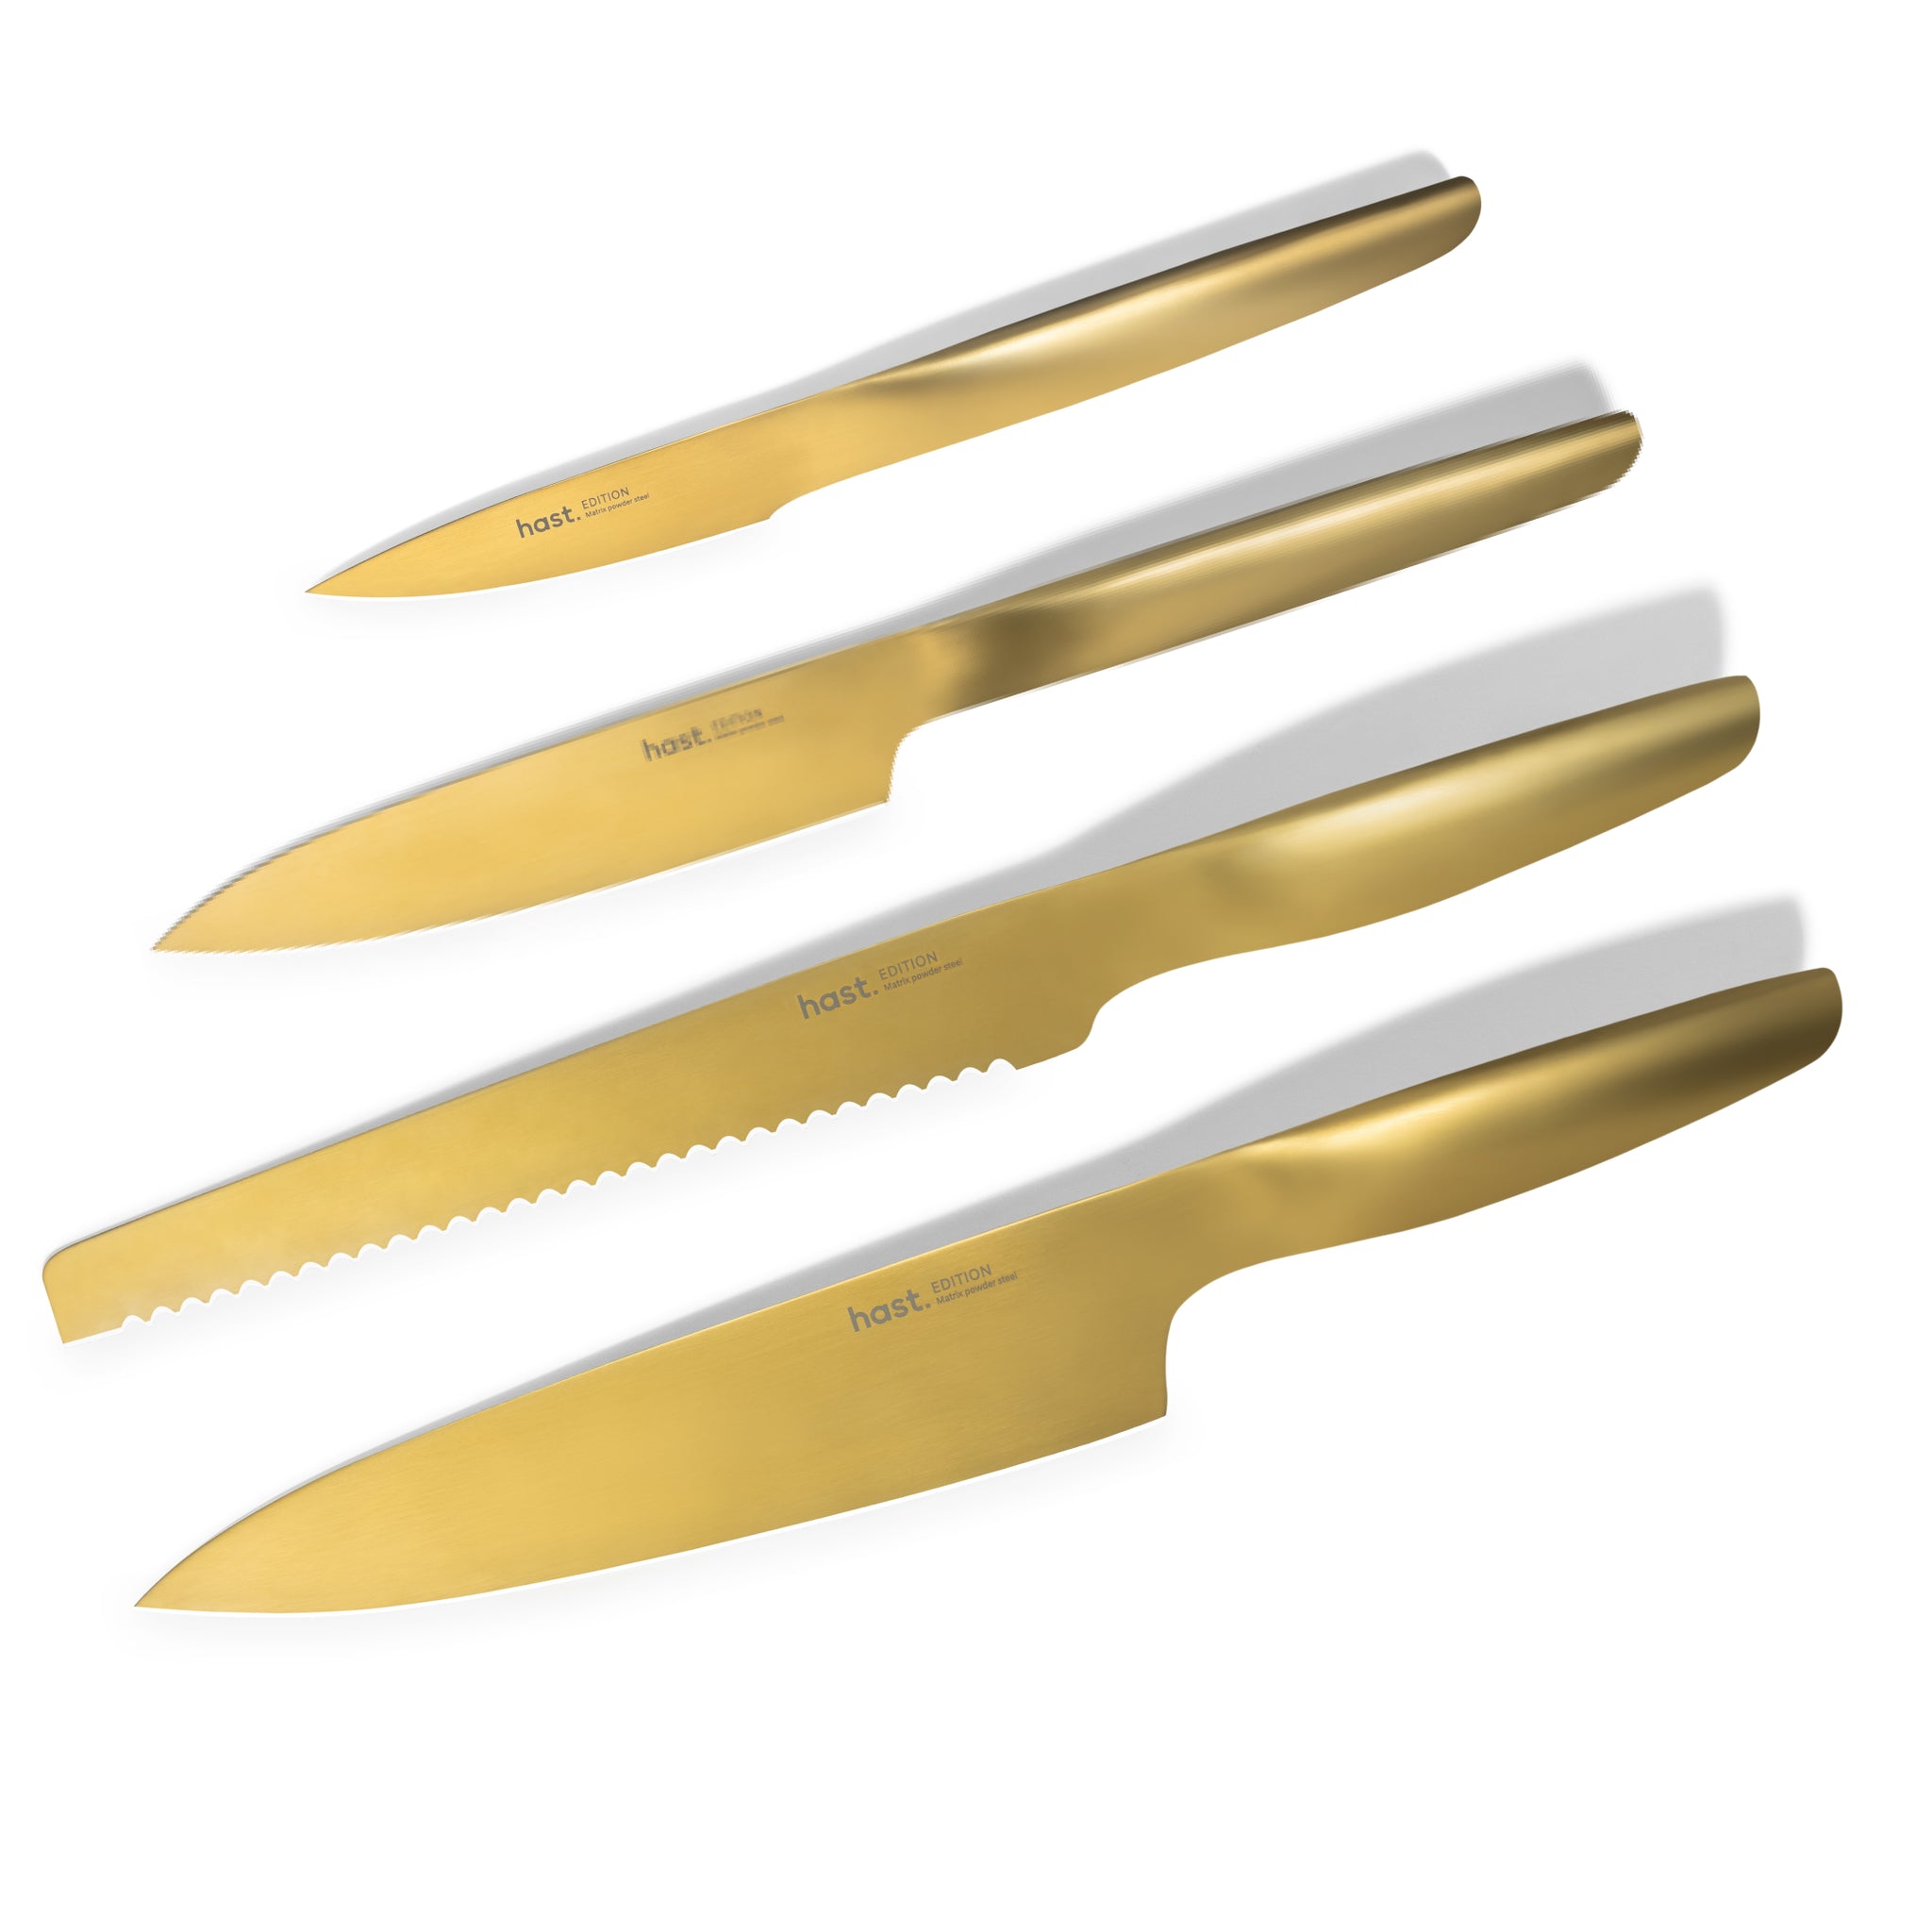 Modern Knife Set: 4 Piece High-performance Design Kitchen Knife Set